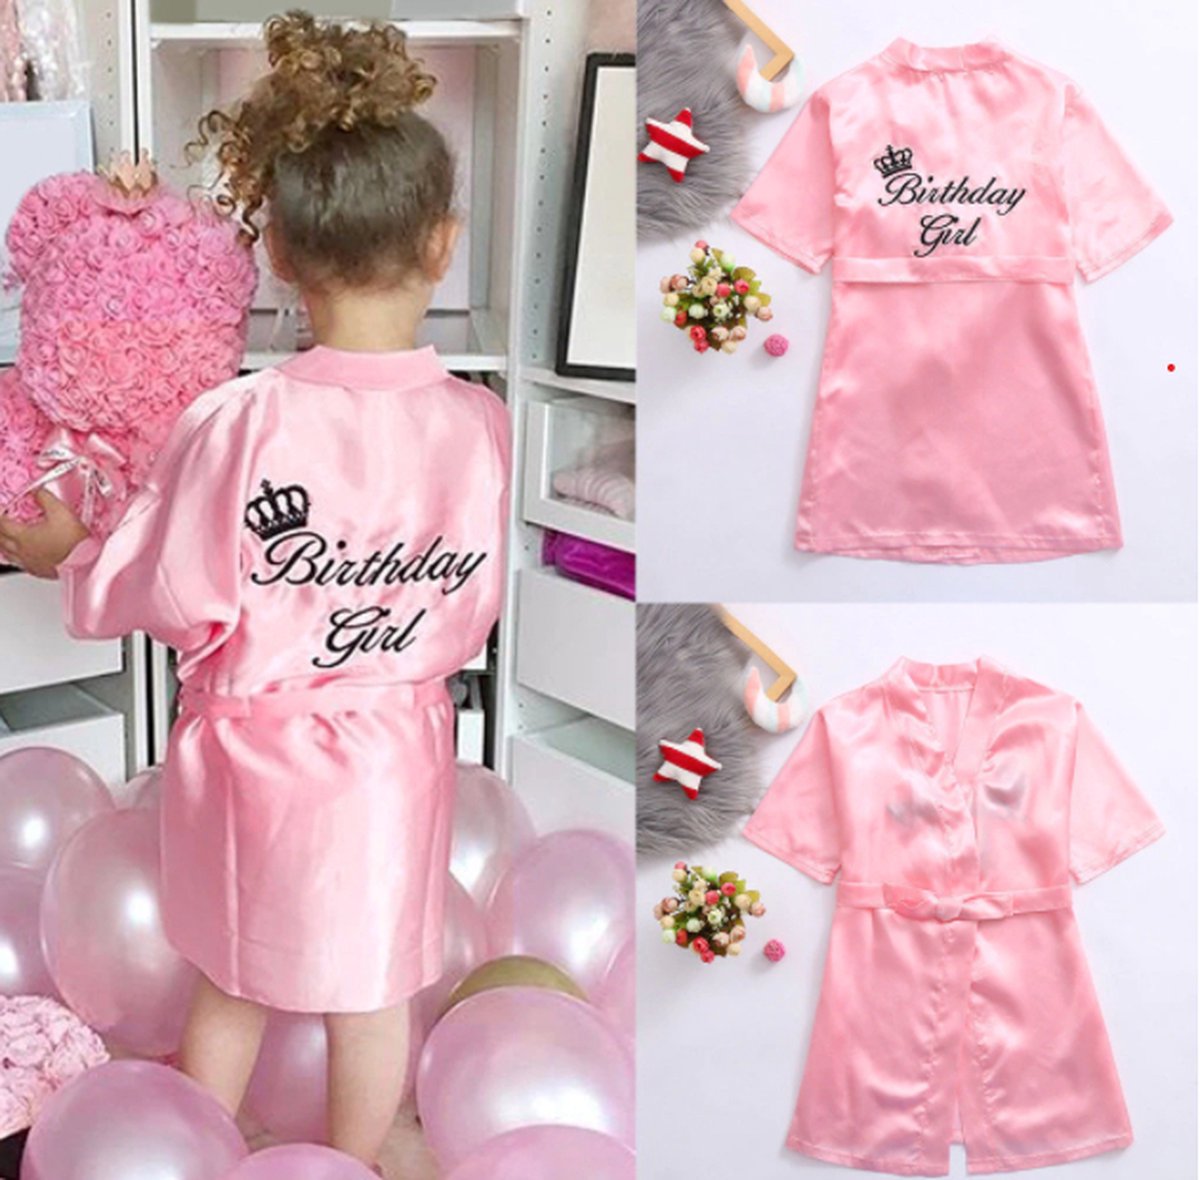 Fiory Kimono Birthday Girl Kinderen| Roze Kimono| Kinderen 4 jaar| Opdruk Birthday Girl| Maat 120| Verjaardagsfeestje| Kinderen| Roze